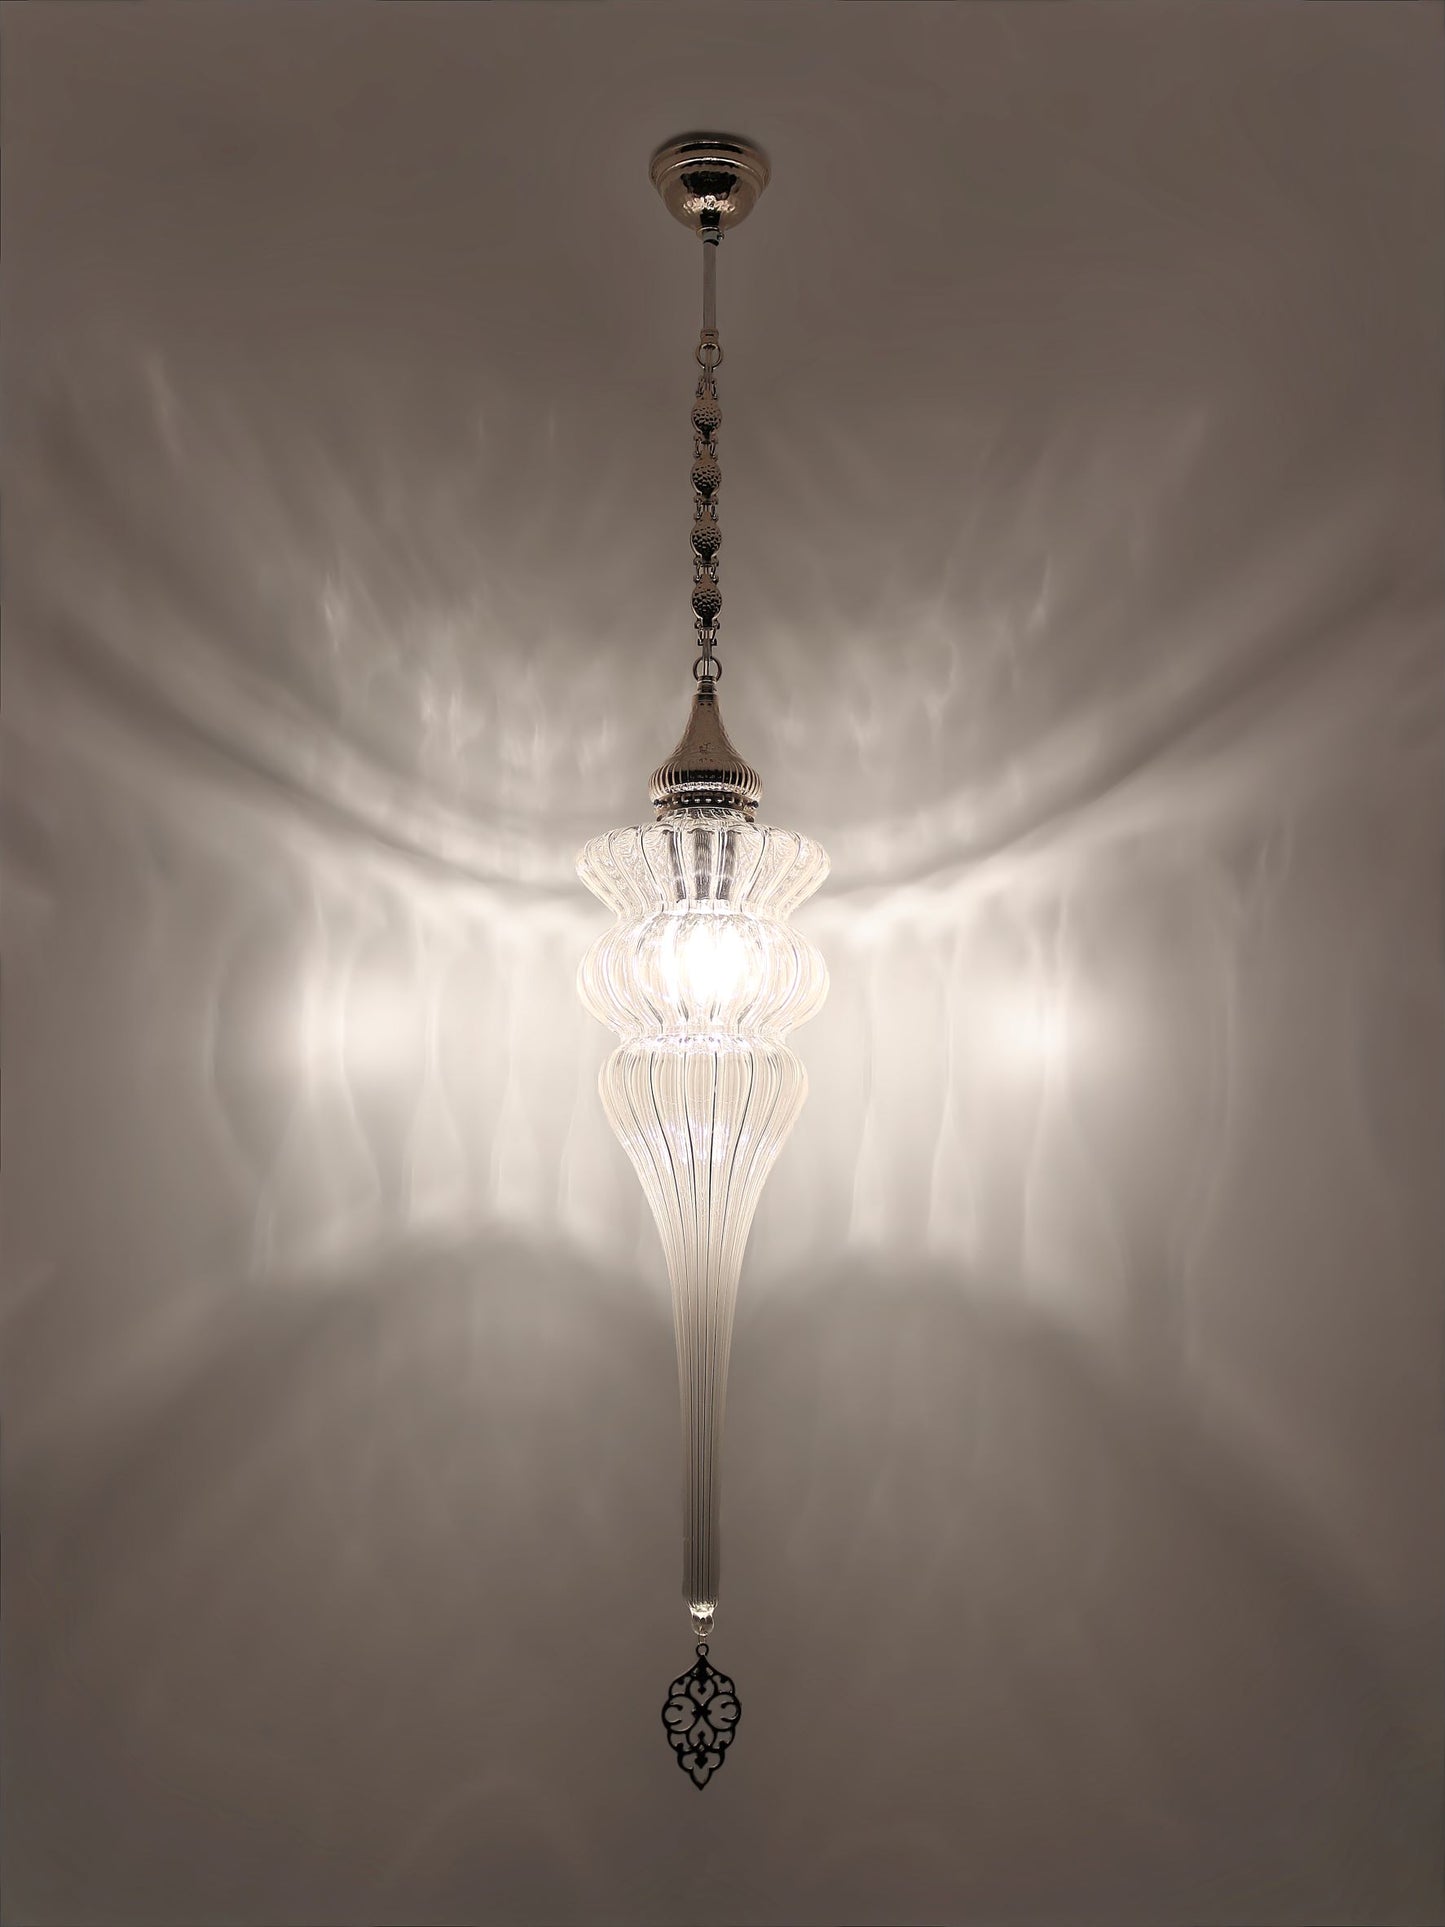 Pyrex Blown Glass Lantern Long Lantern Turkish Lamp